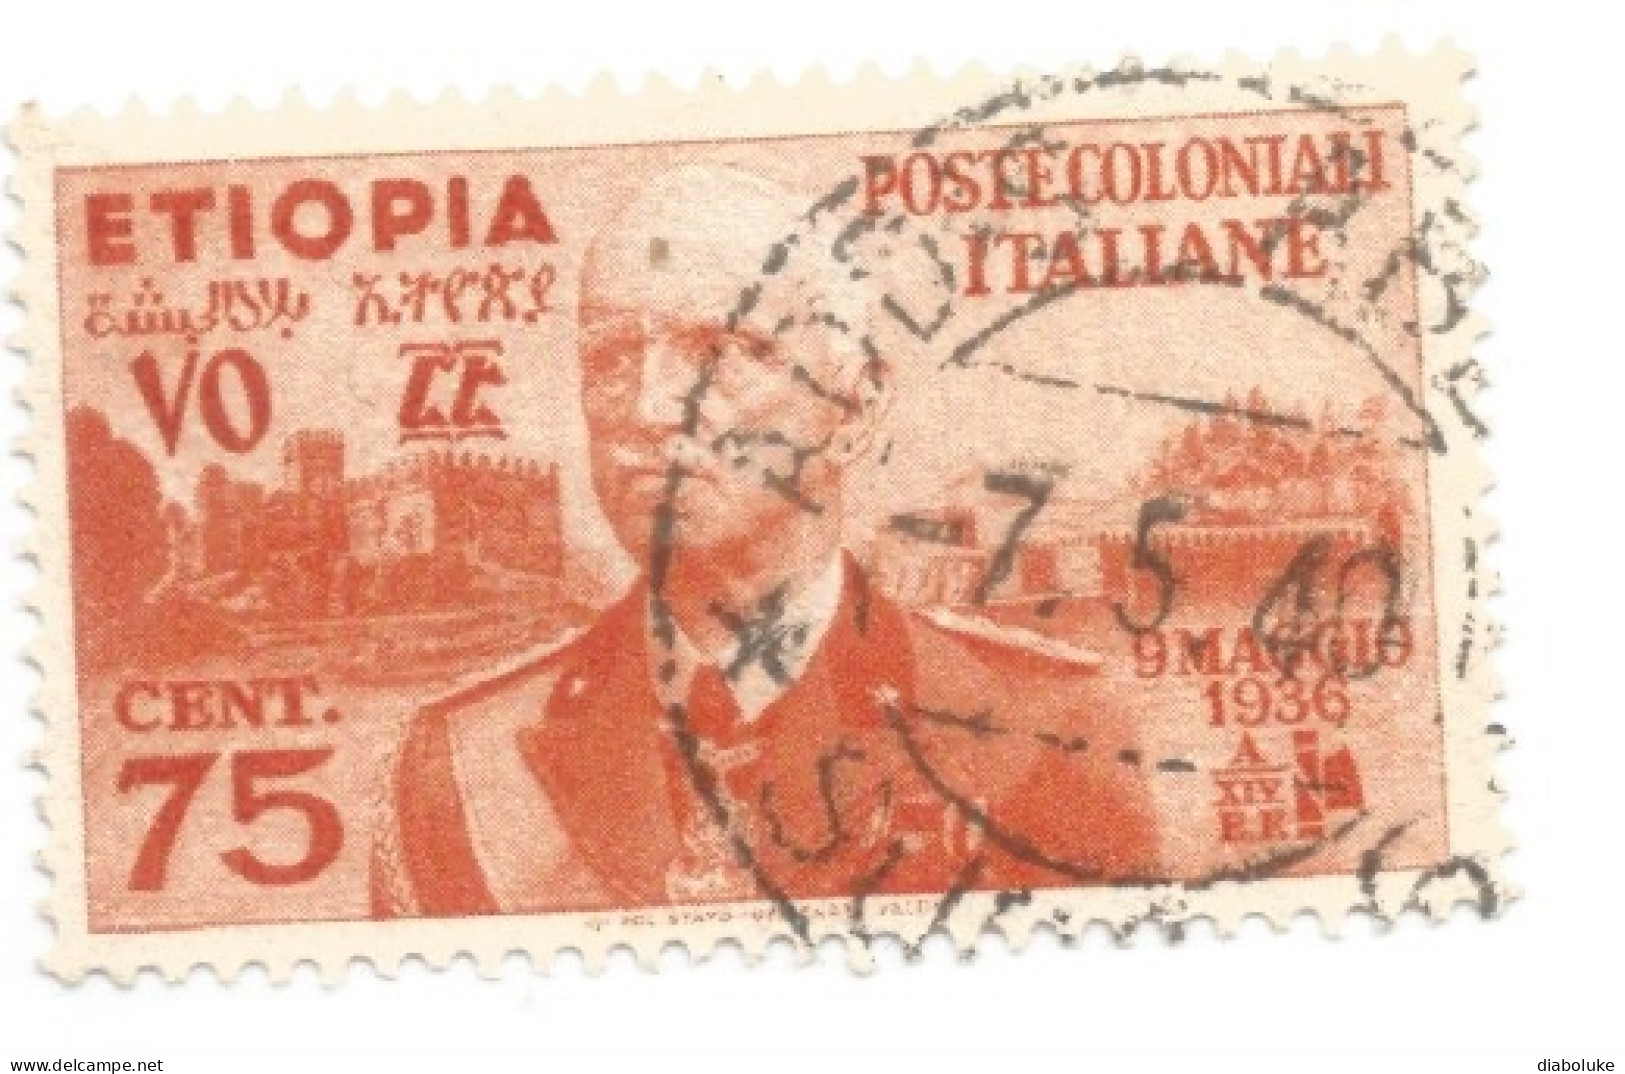 (COLONIE E POSSEDIMENTI) 1936, ETIOPIA, VITTORIO EMANUELE III - Serie di 7 francobolli usati